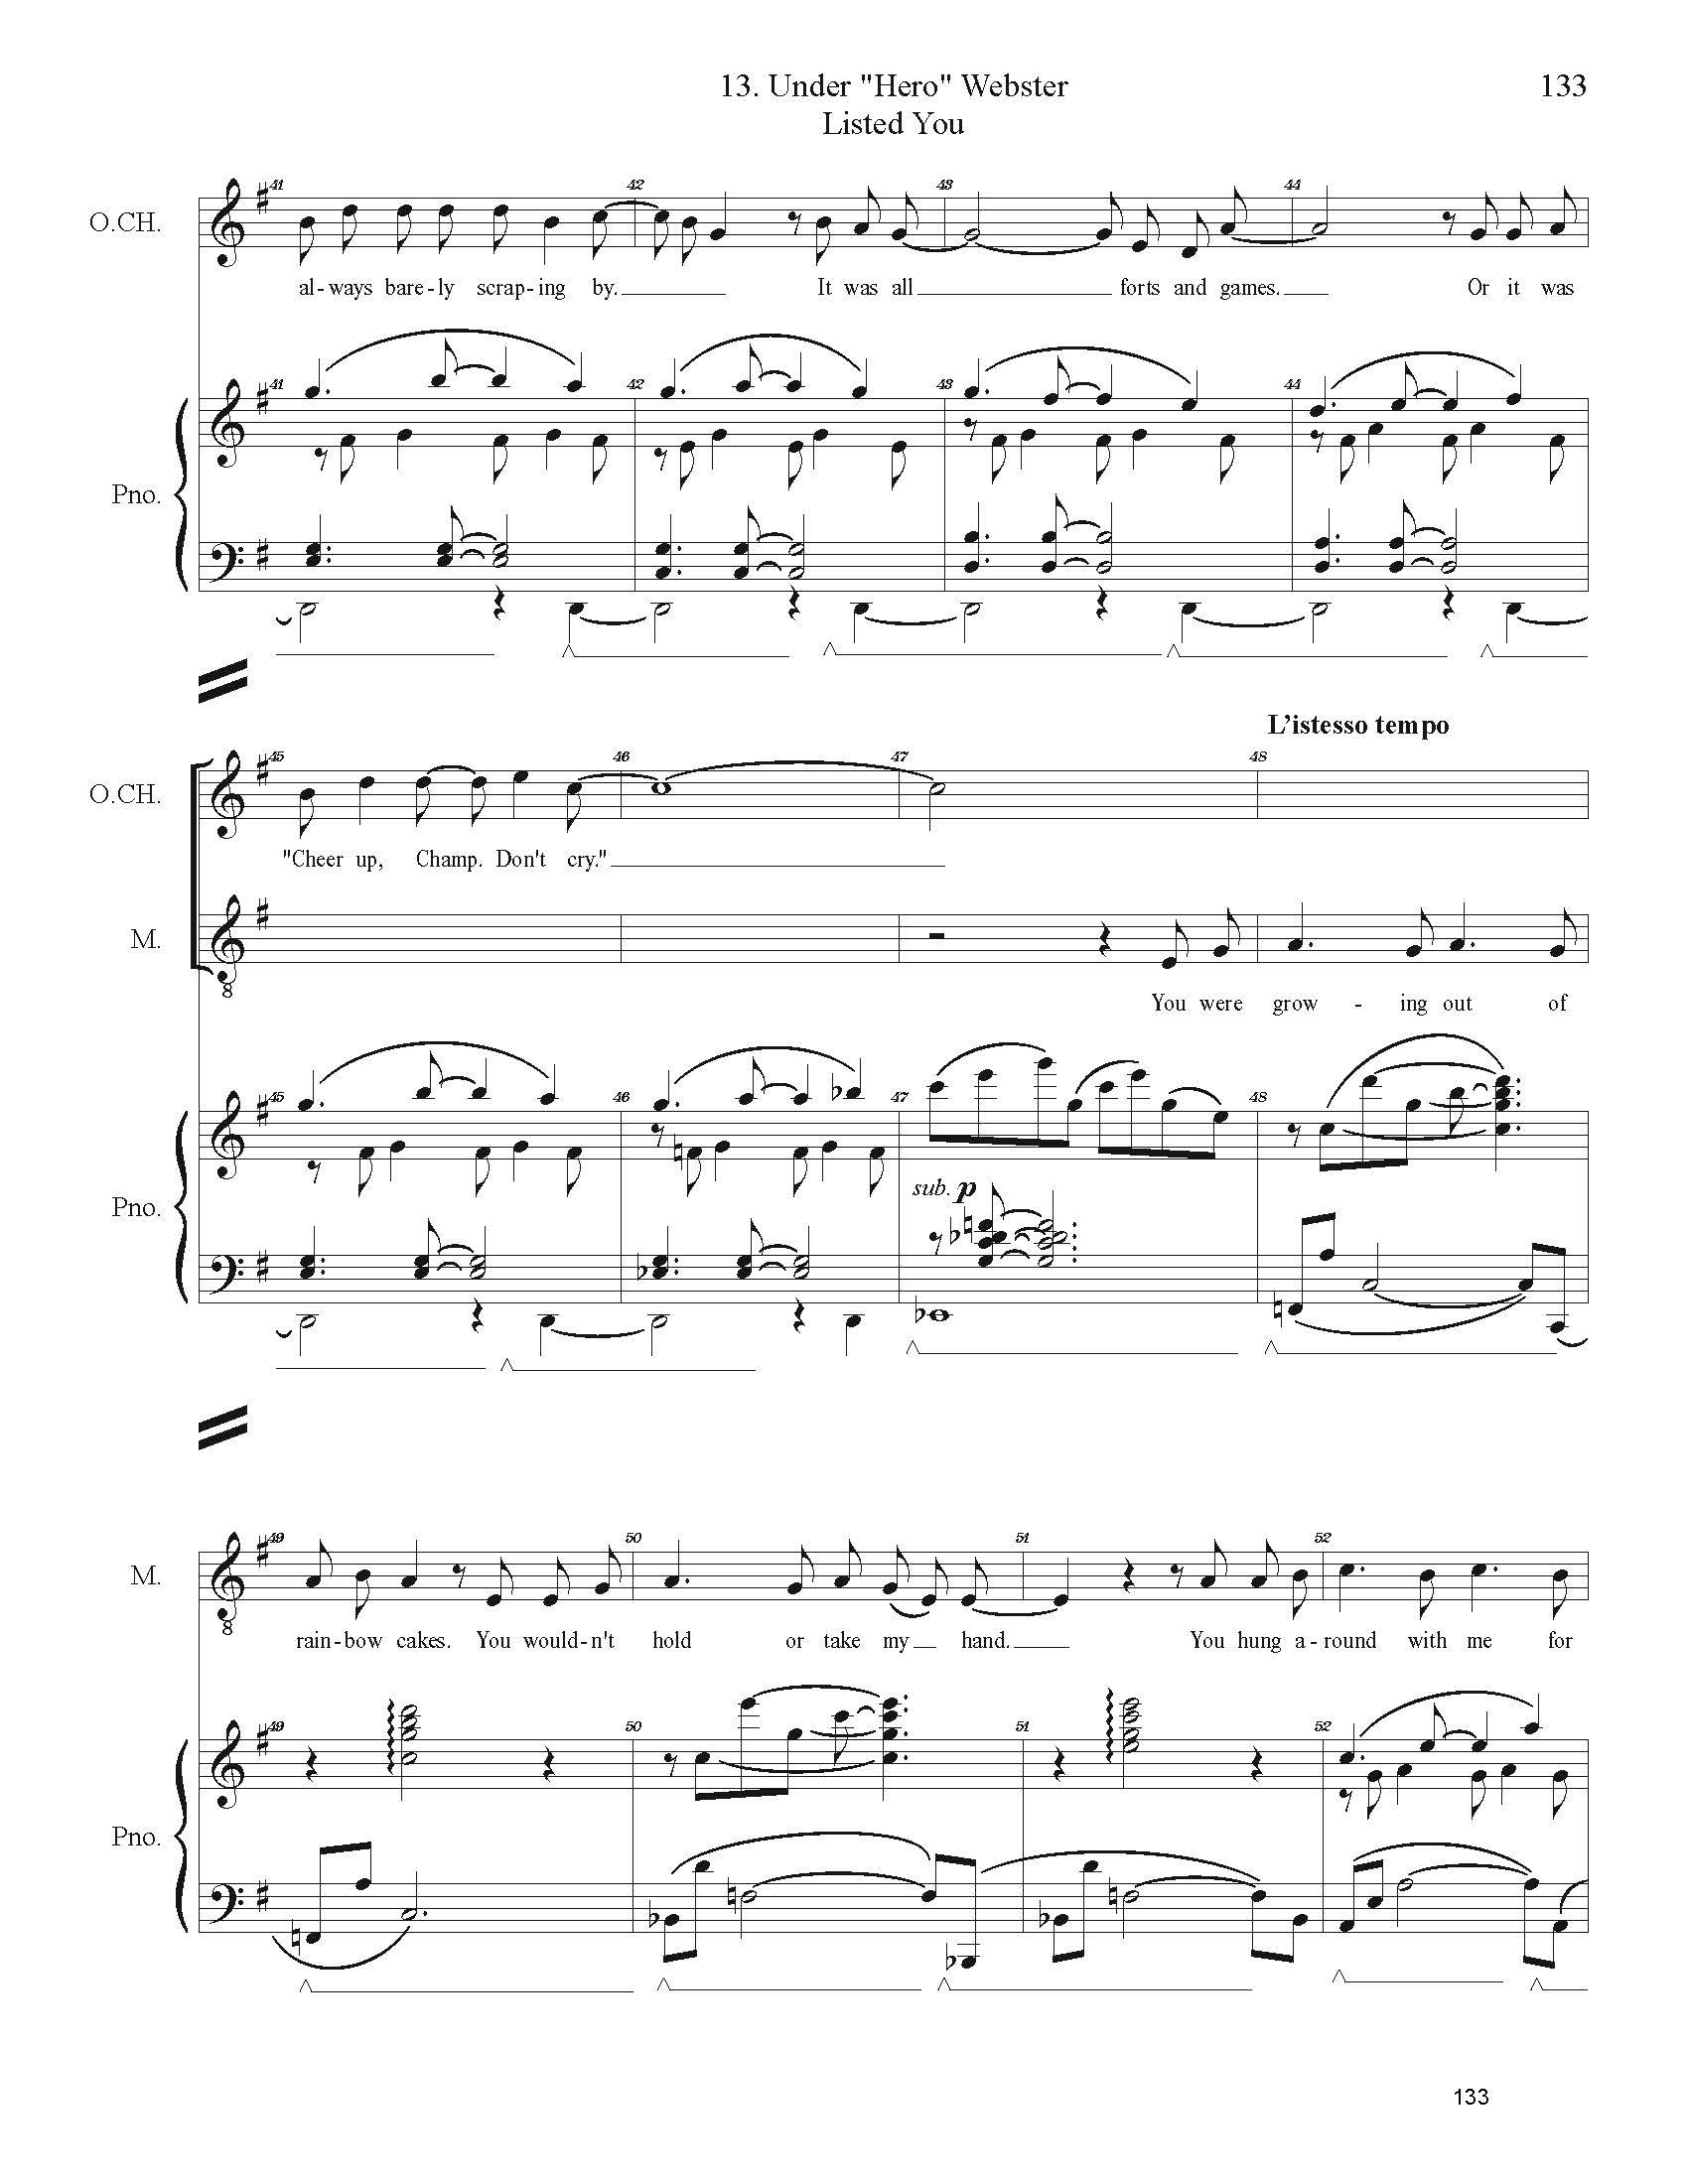 FULL PIANO VOCAL SCORE DRAFT 1 - Score_Page_133.jpg